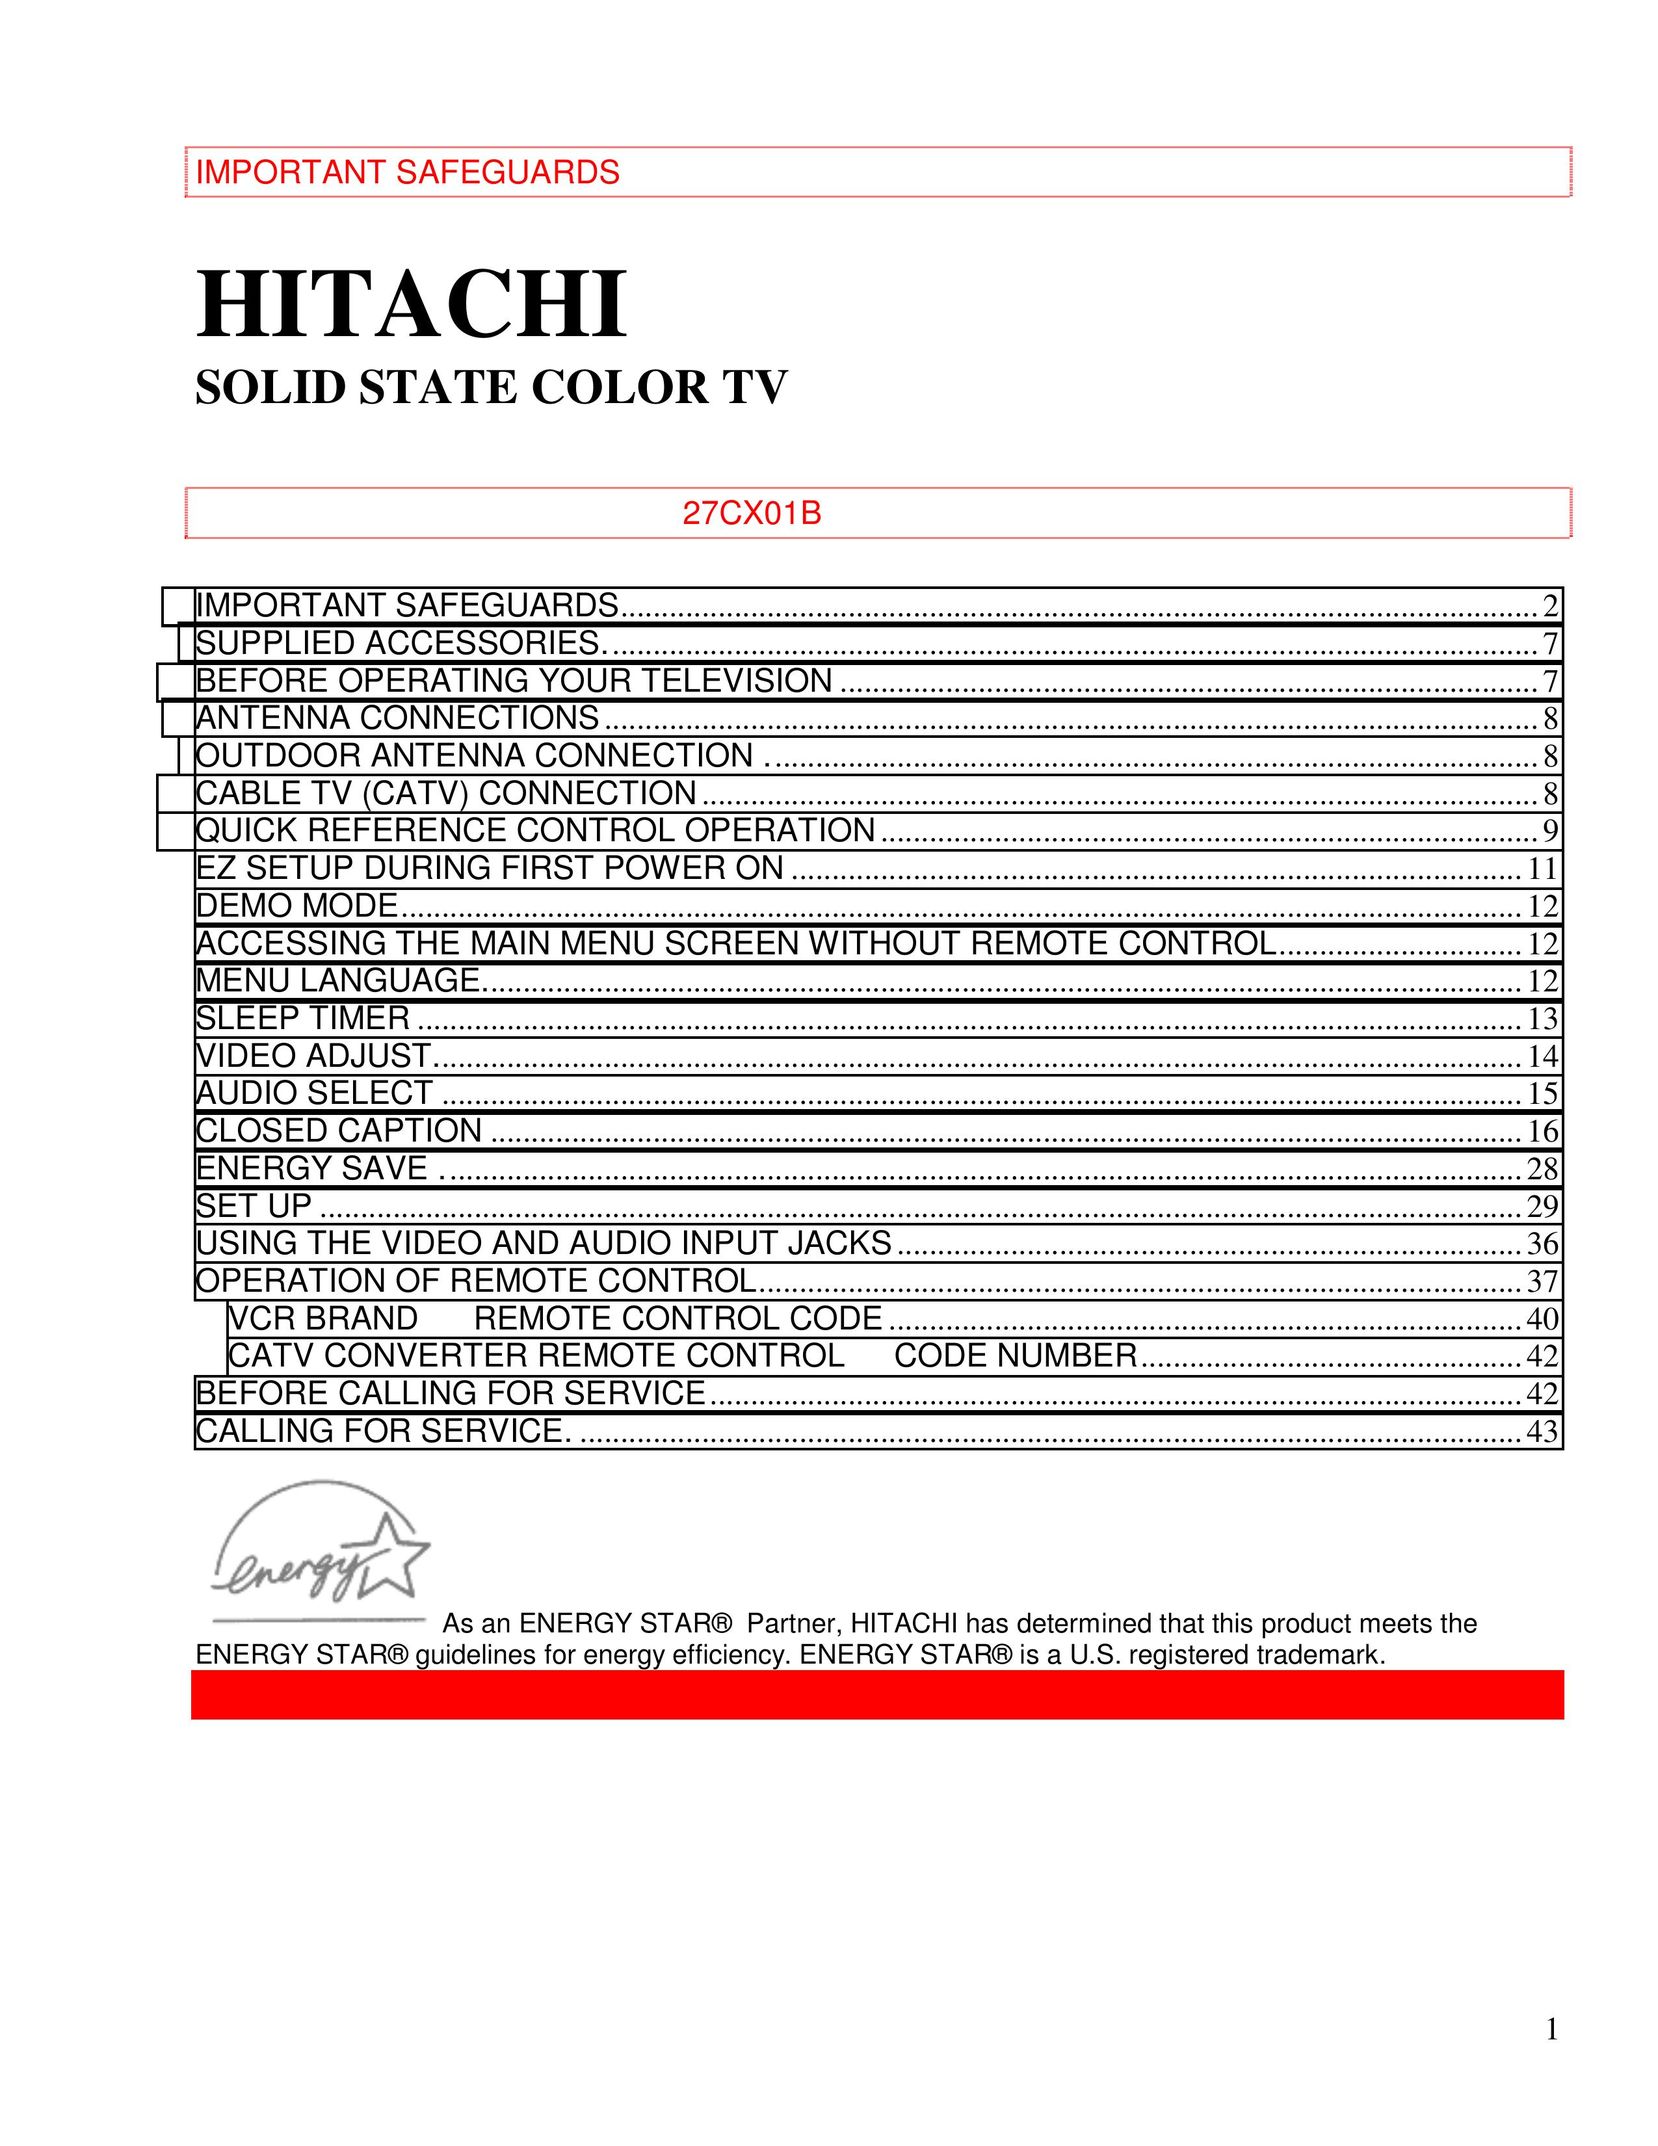 Hitachi 27CX01B CRT Television User Manual